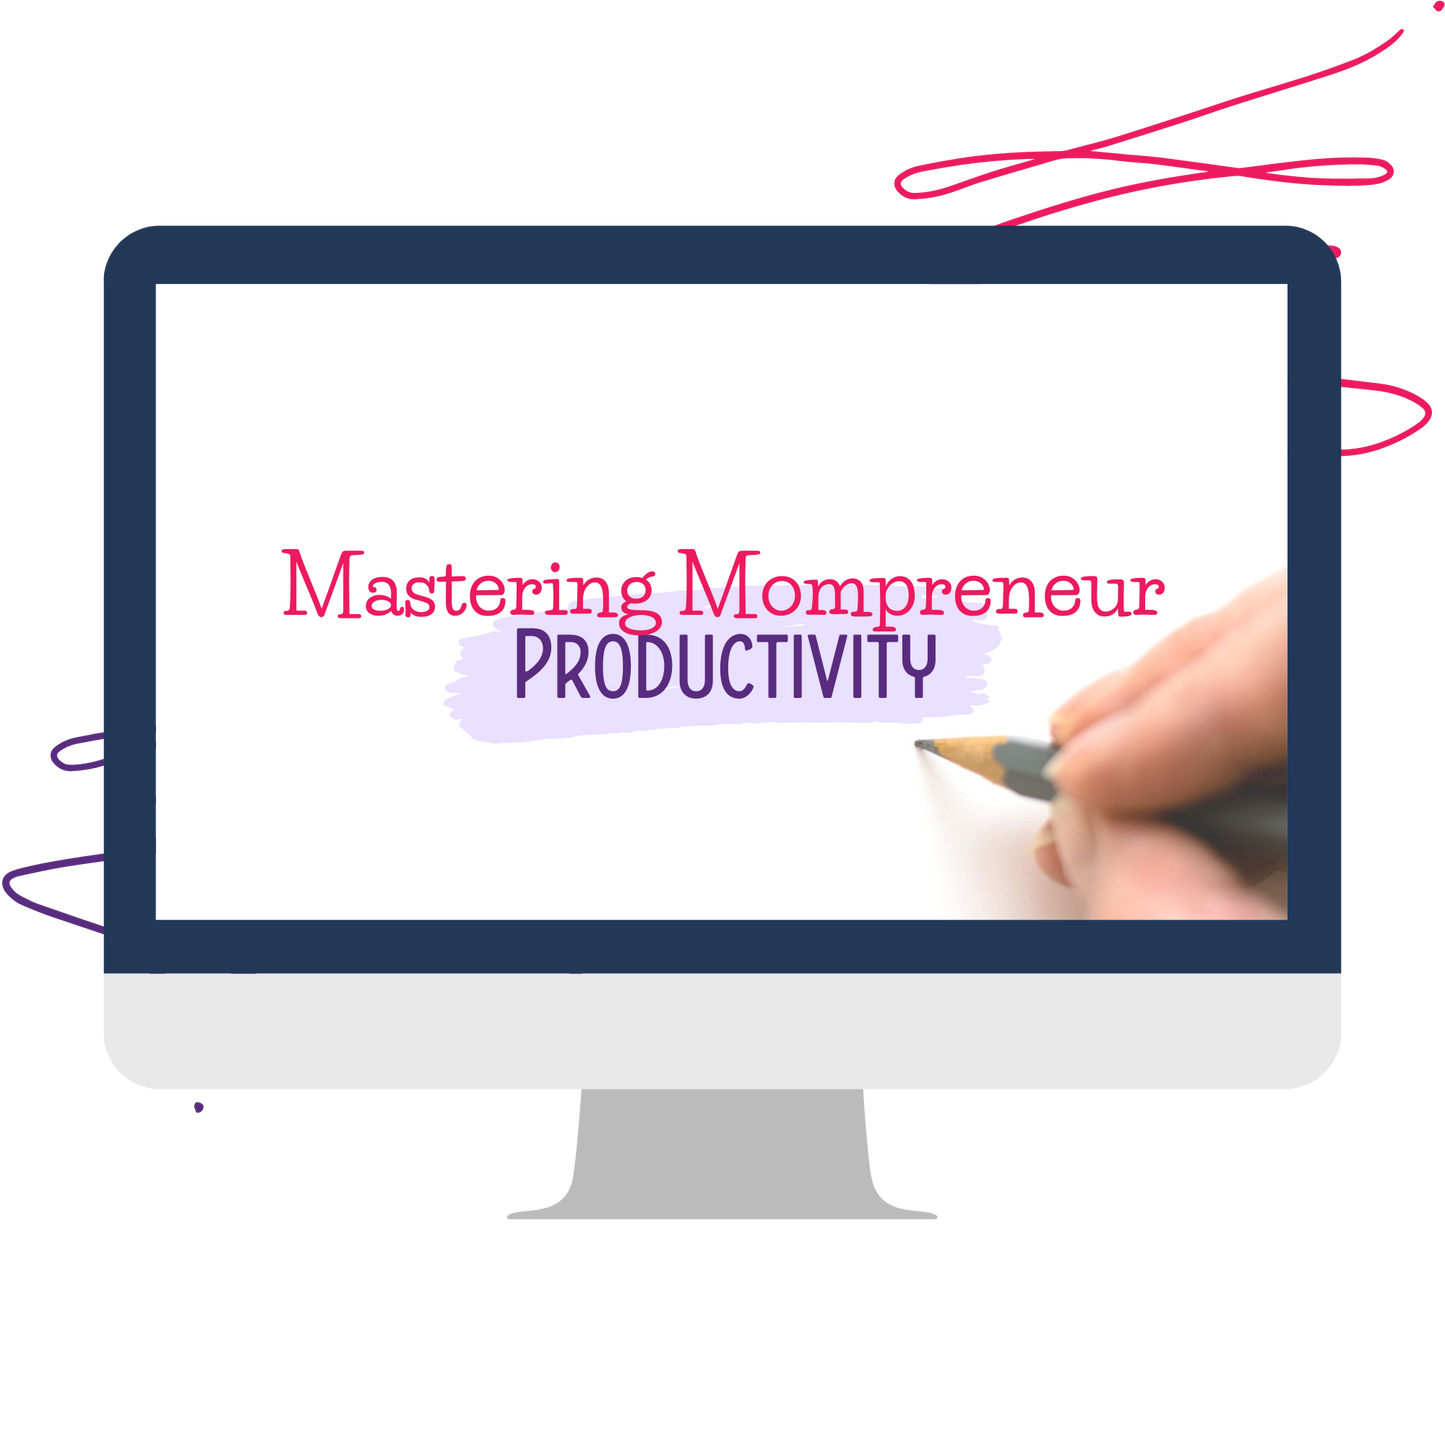 Mastering Mompreneur Productivity